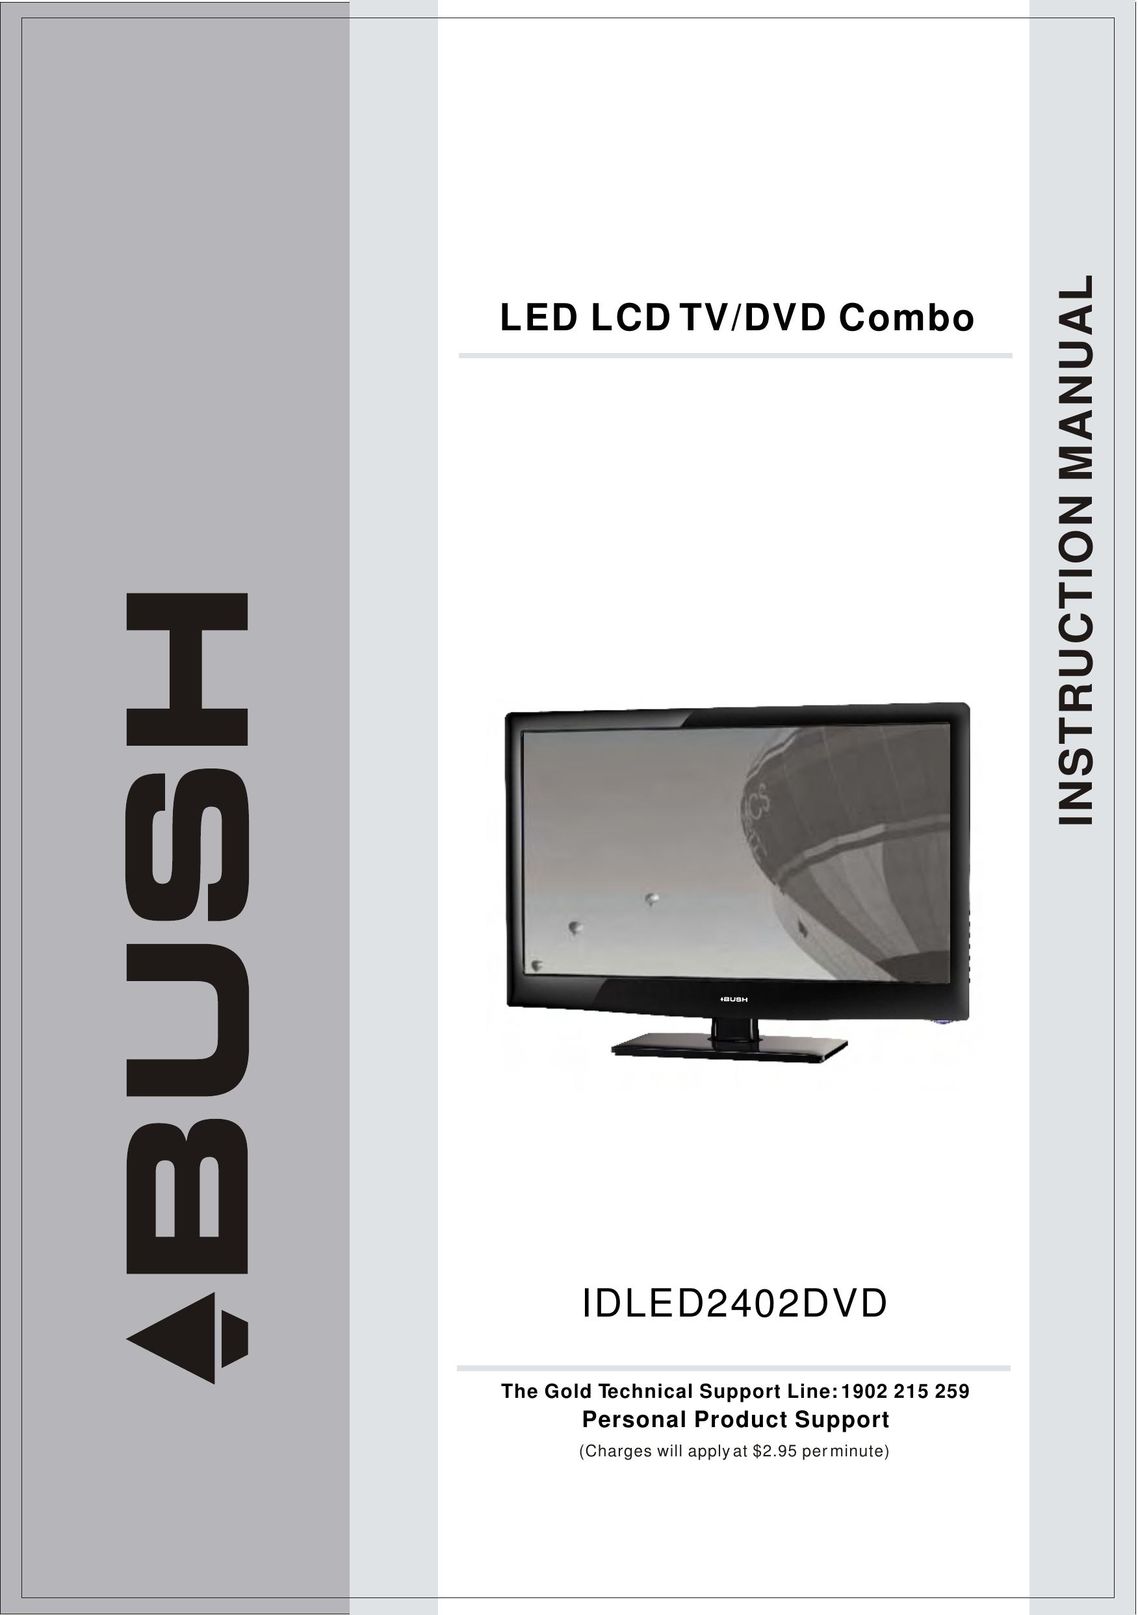 BUSH IDLED2402DVD Flat Panel Television User Manual (Page 1)